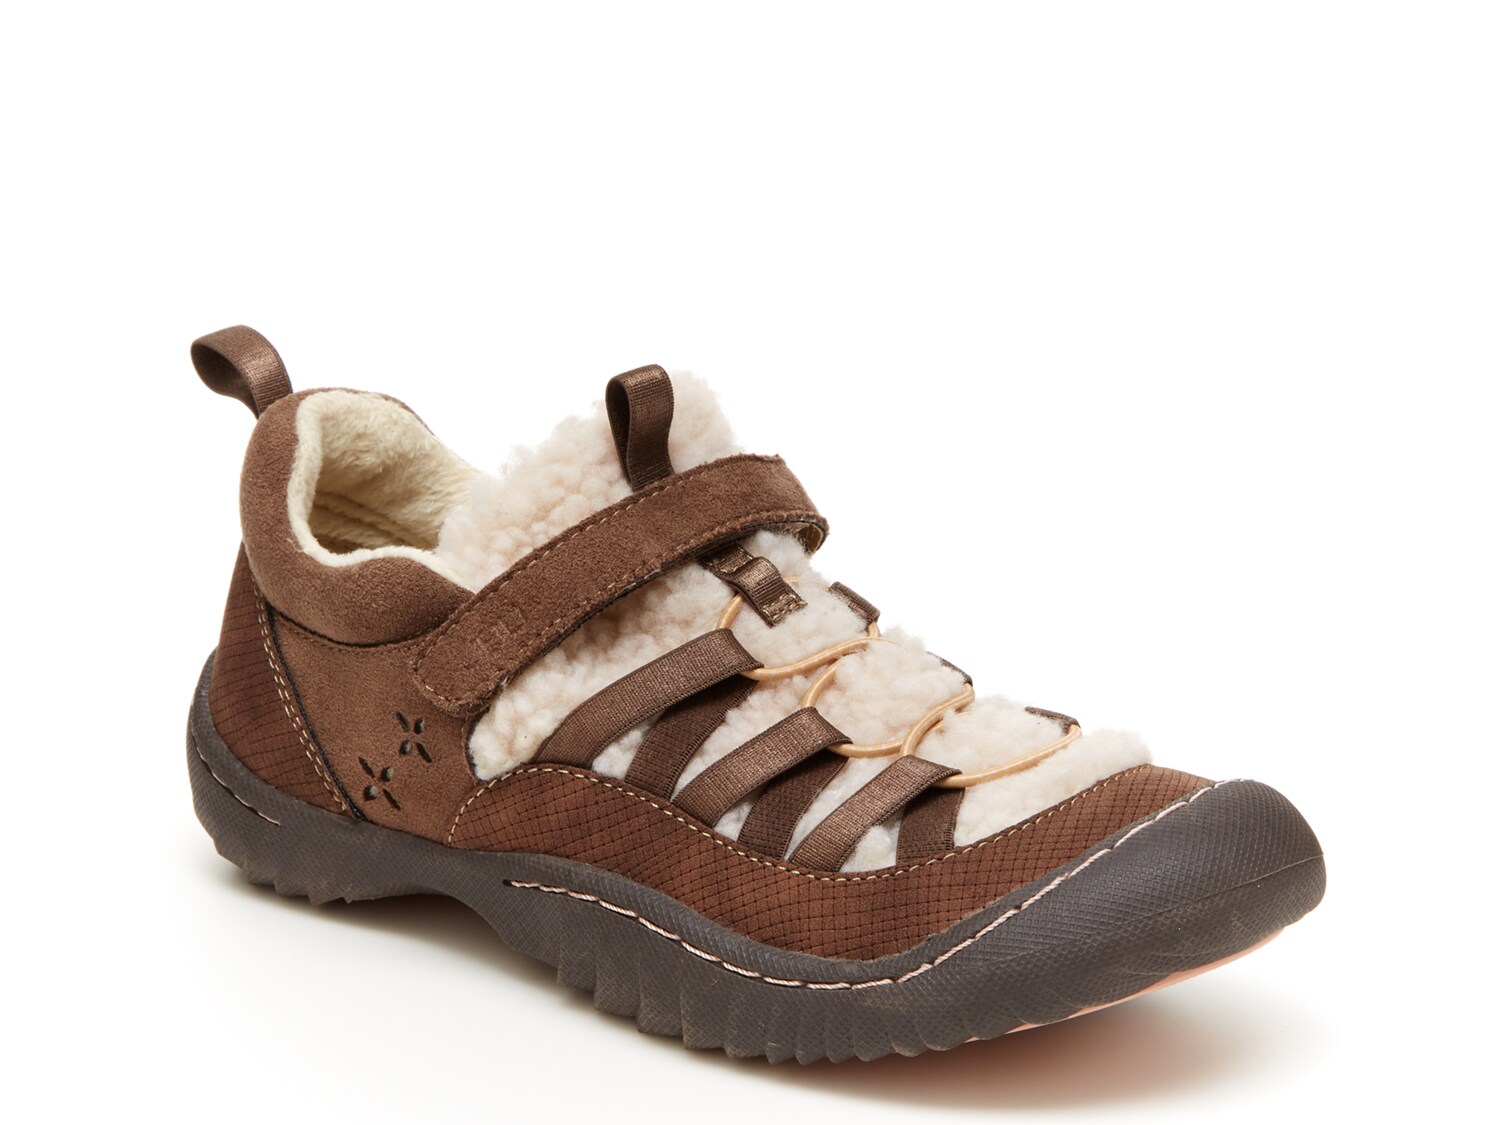 JBU by Jambu Shoes, Boots, Sandals 